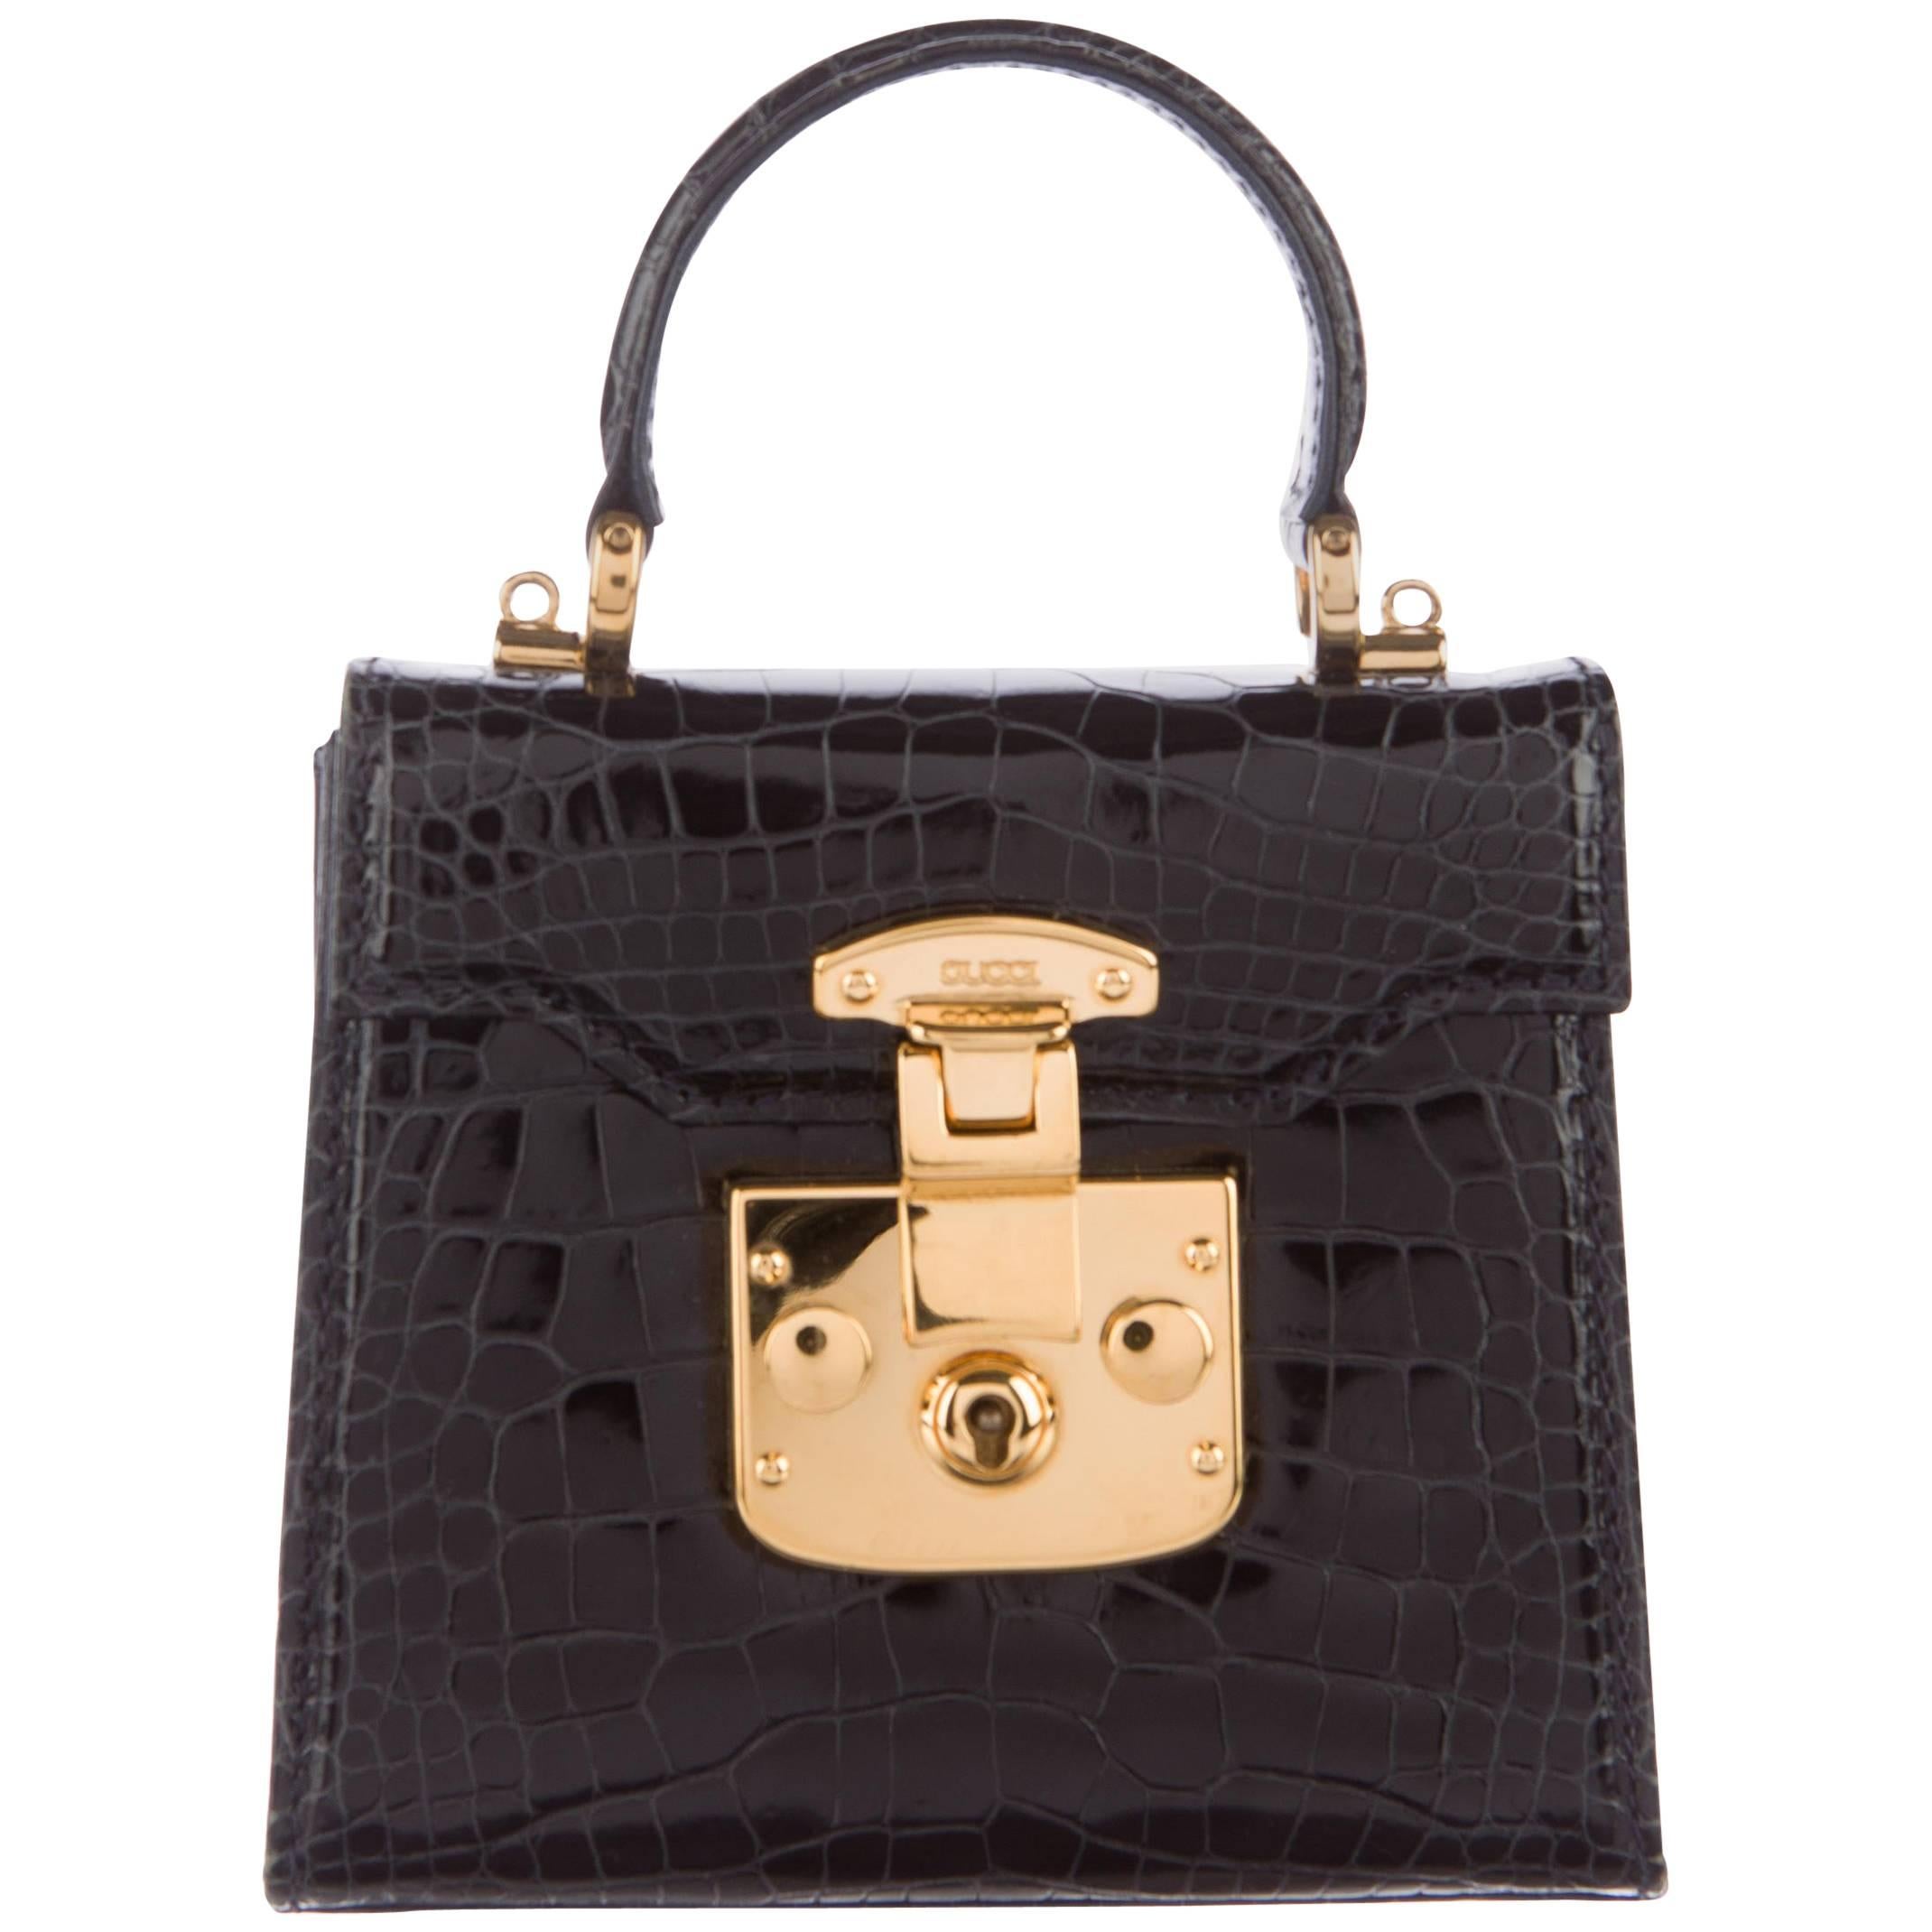 Gucci Crocodile Leather Gold Kelly Style Evening Top Handle Satchel Shoulder Bag